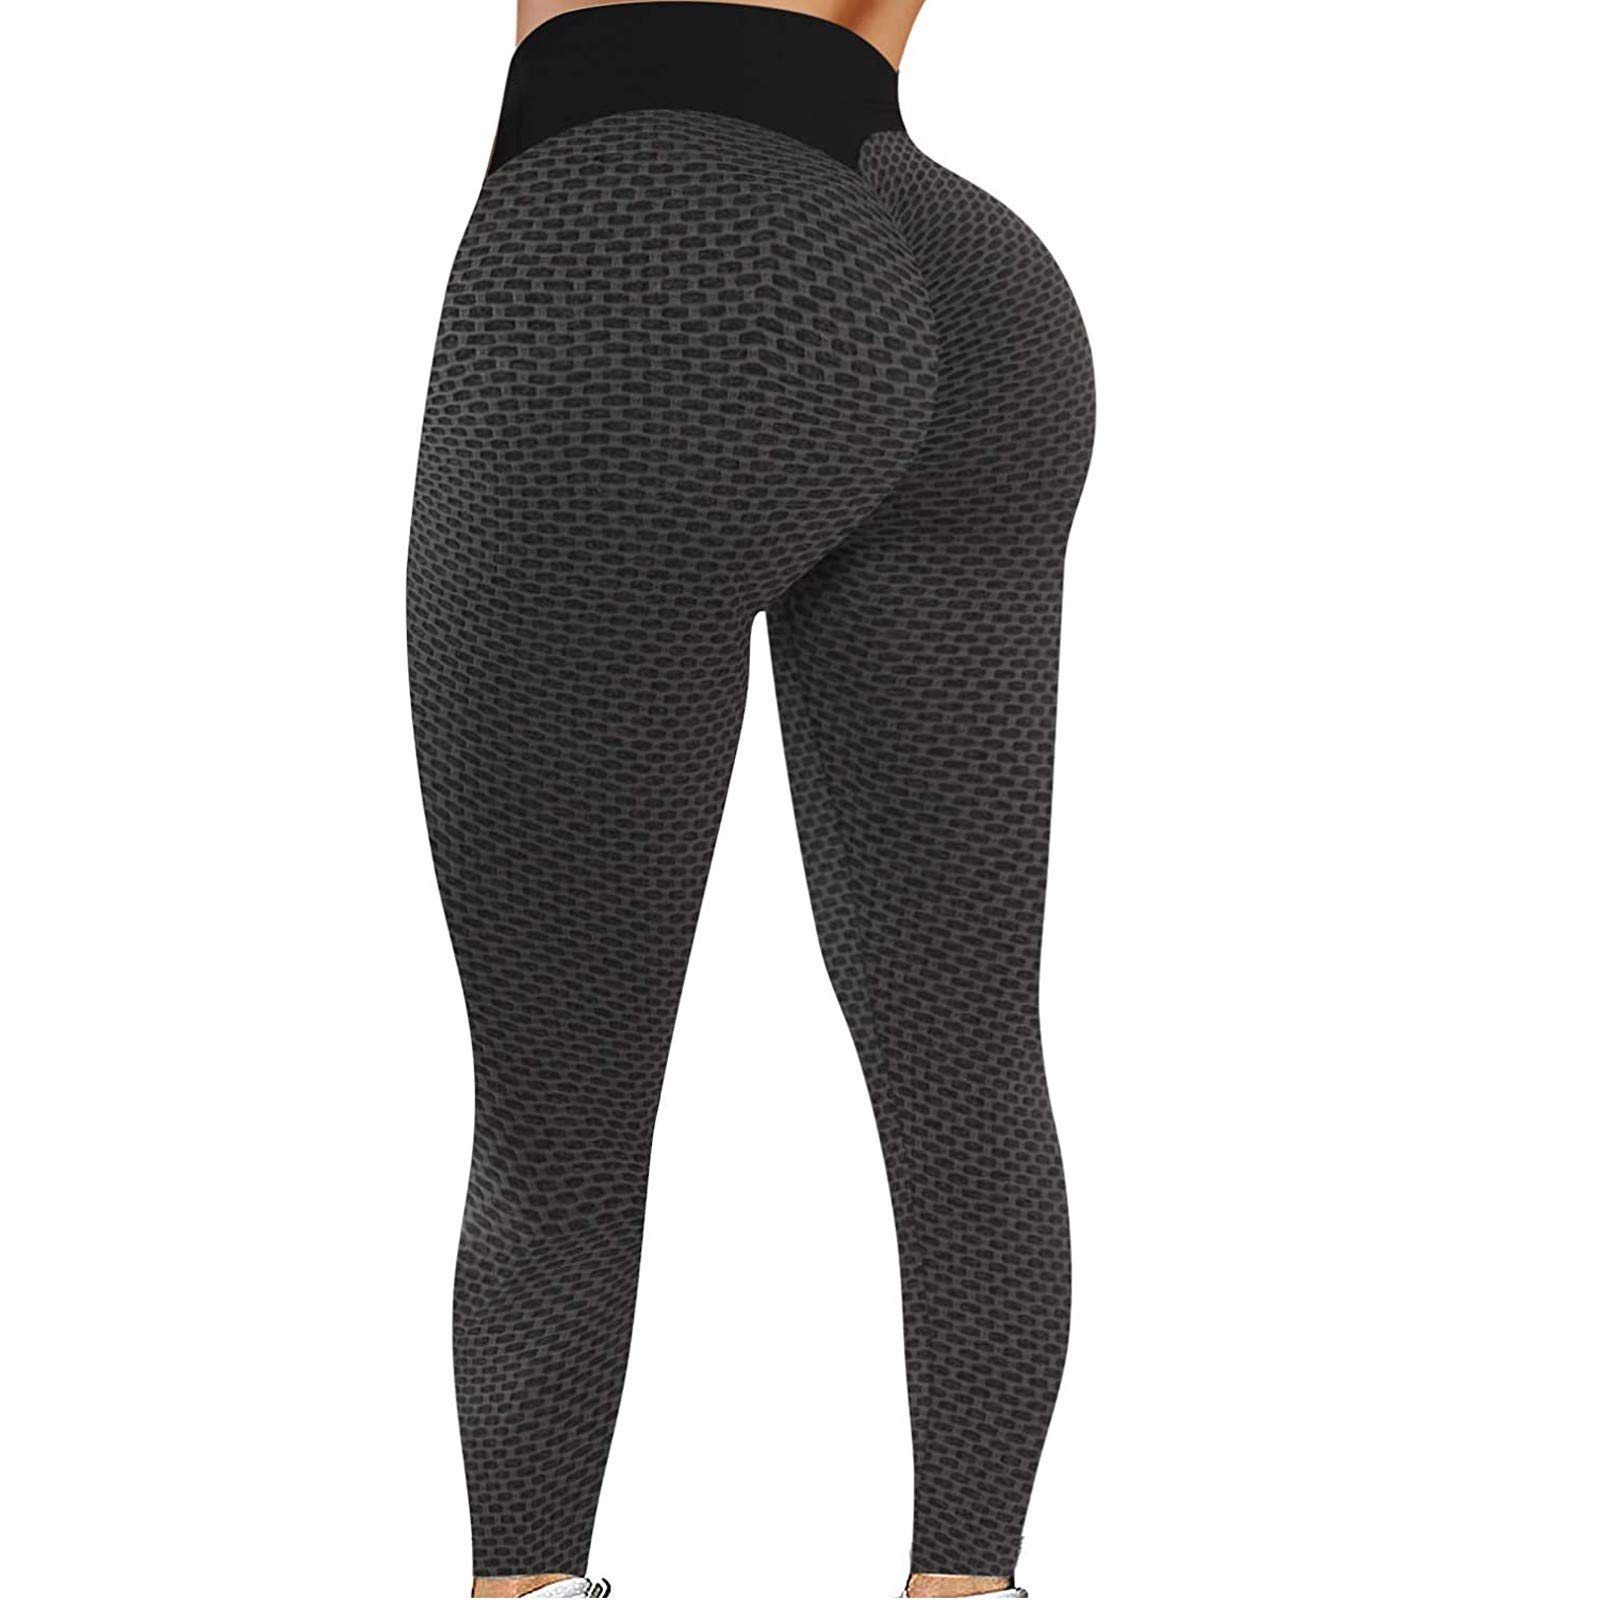 YRAETENM Sexy Yoga Pants for Women Butt Lifting Anti Cellulite